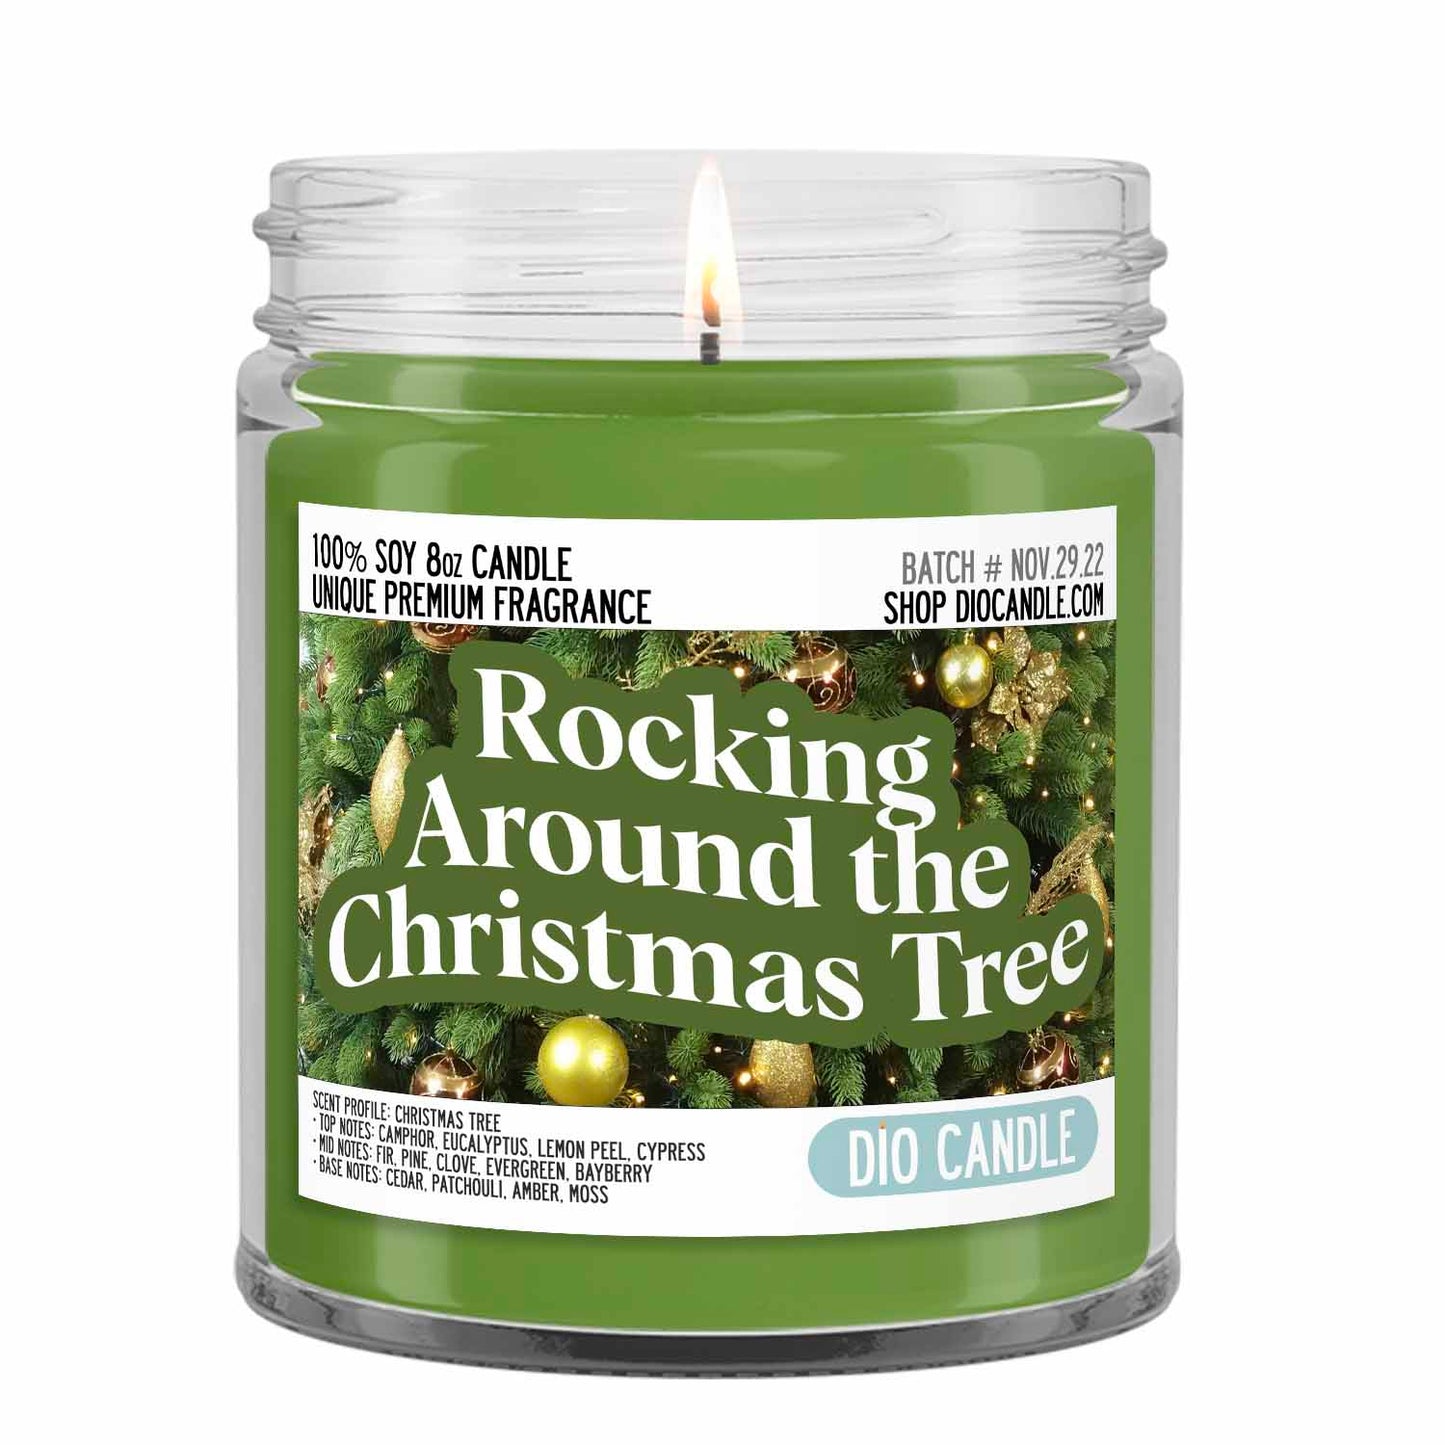 Rocking Around the Christmas Tree Candle